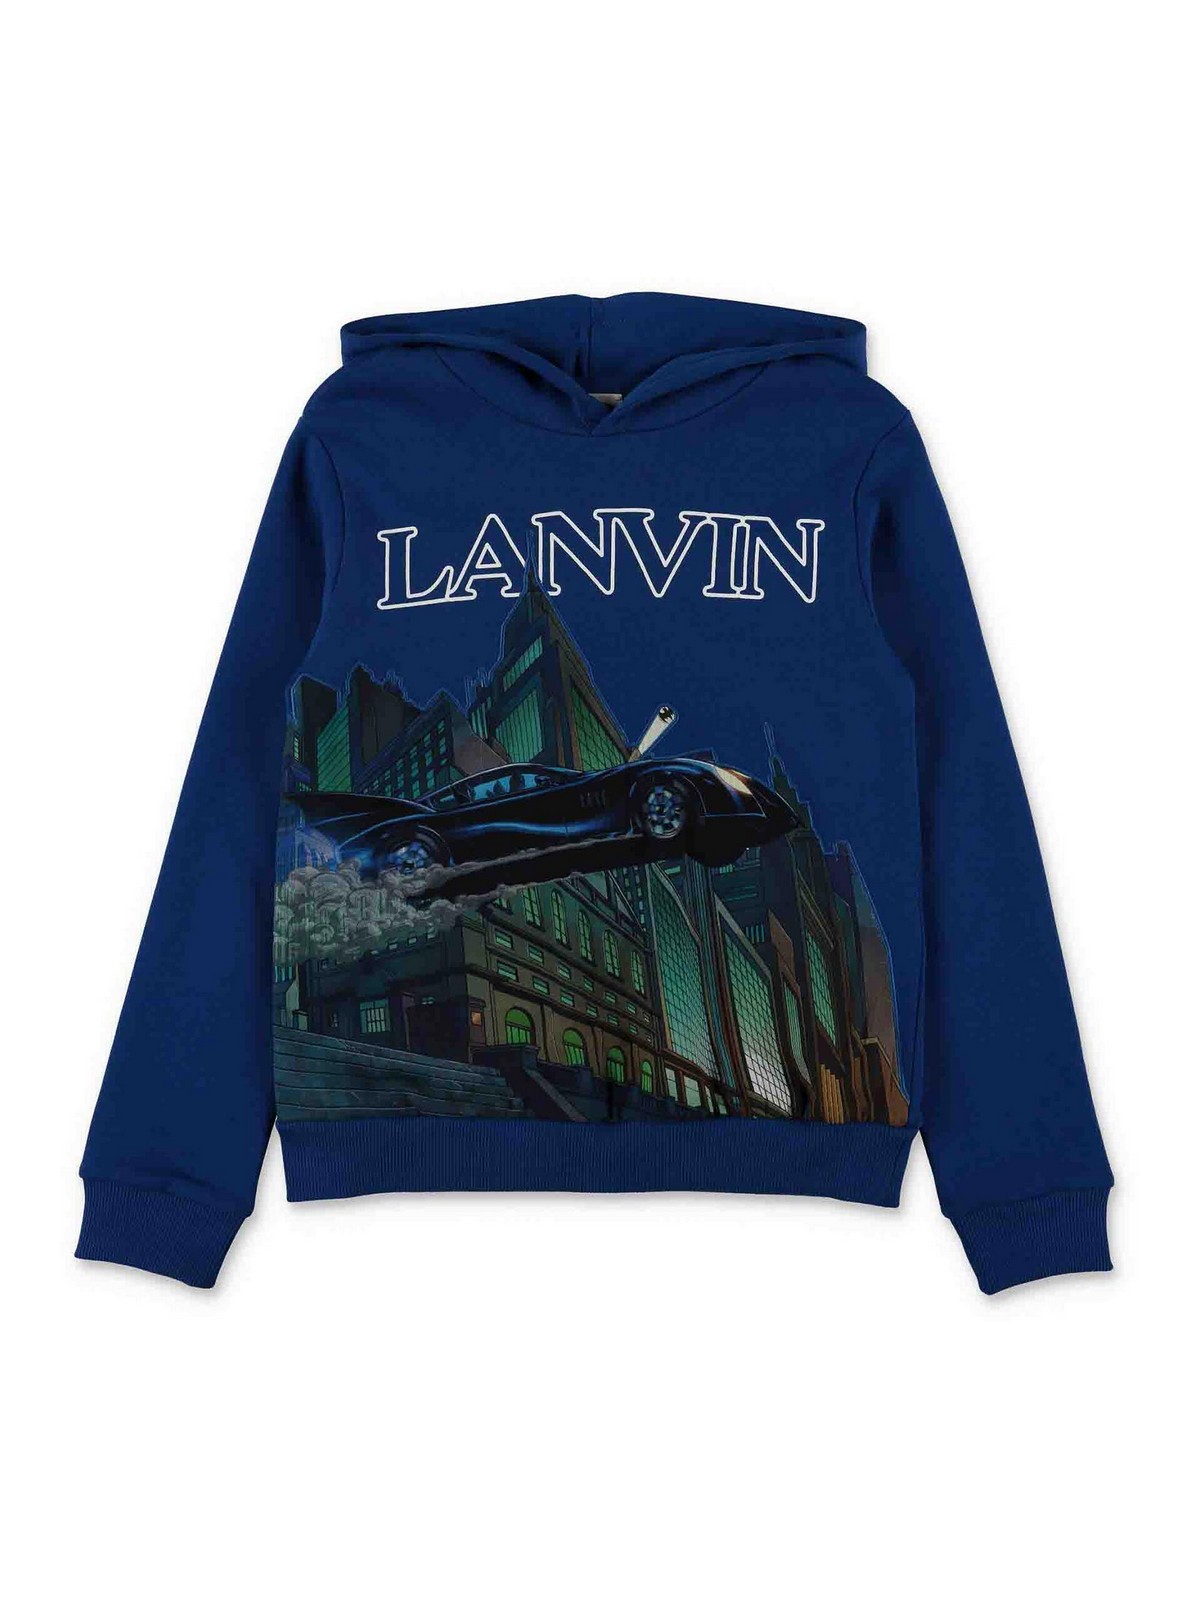 Lanvin Kids' Royale Blue Cotton Batman Hoodie